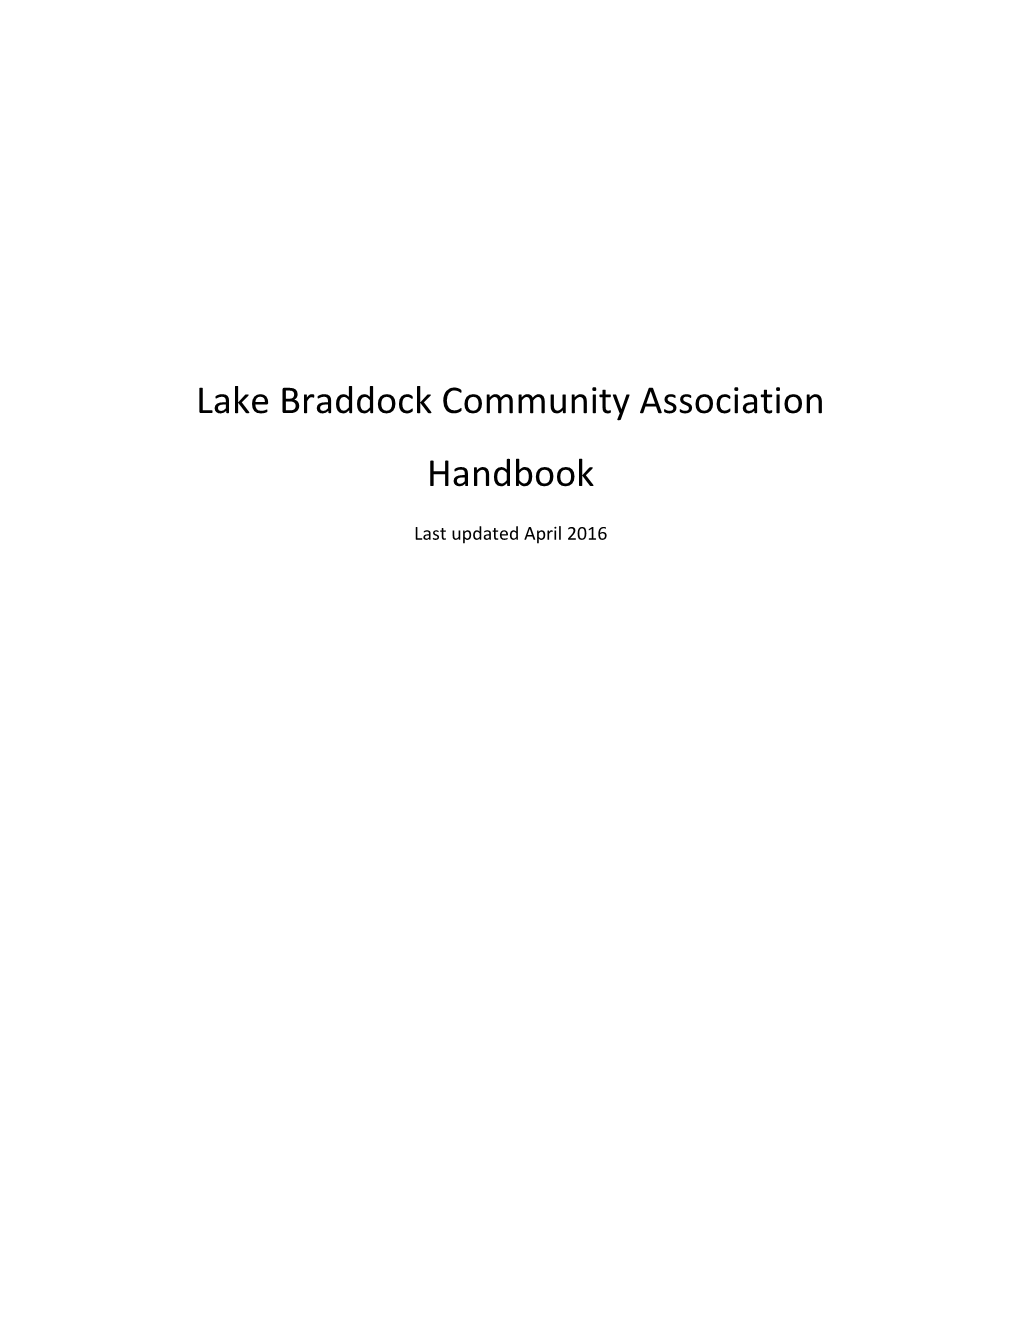 Lake Braddock Community Association Handbook